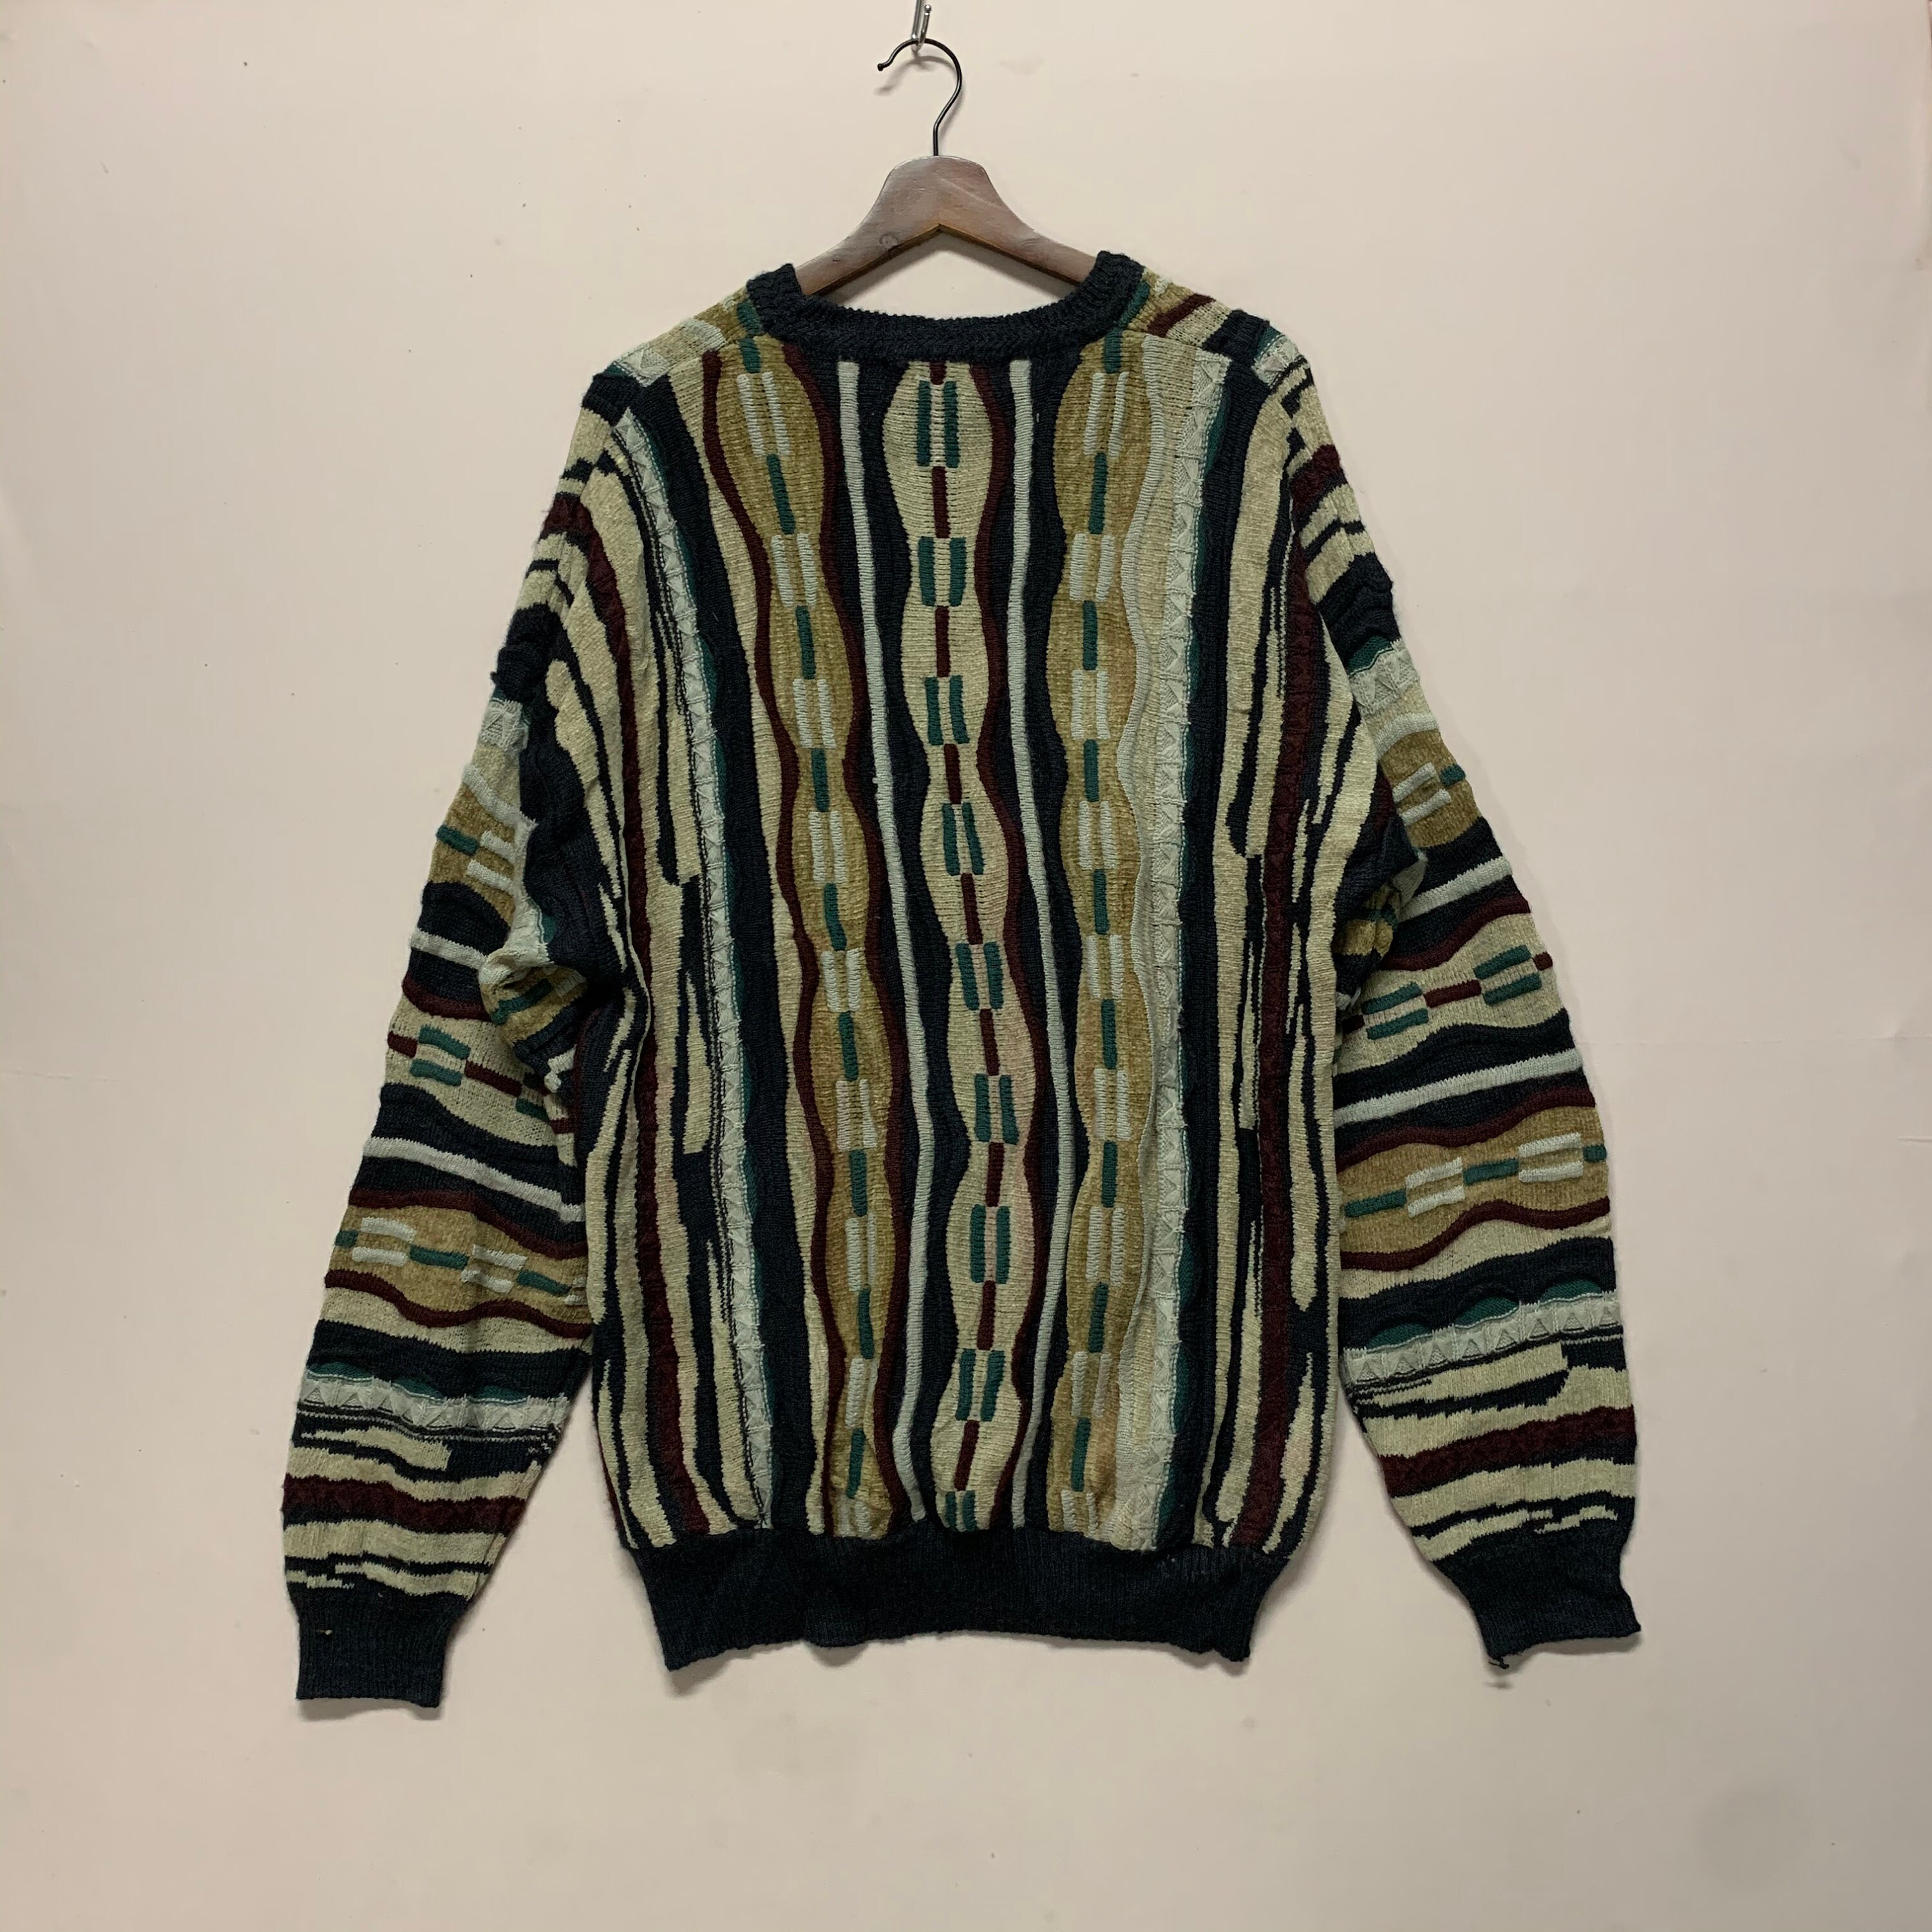 Arnaldo Bassini Like Coogi Knitwear Sweater Knitting Multi - Etsy